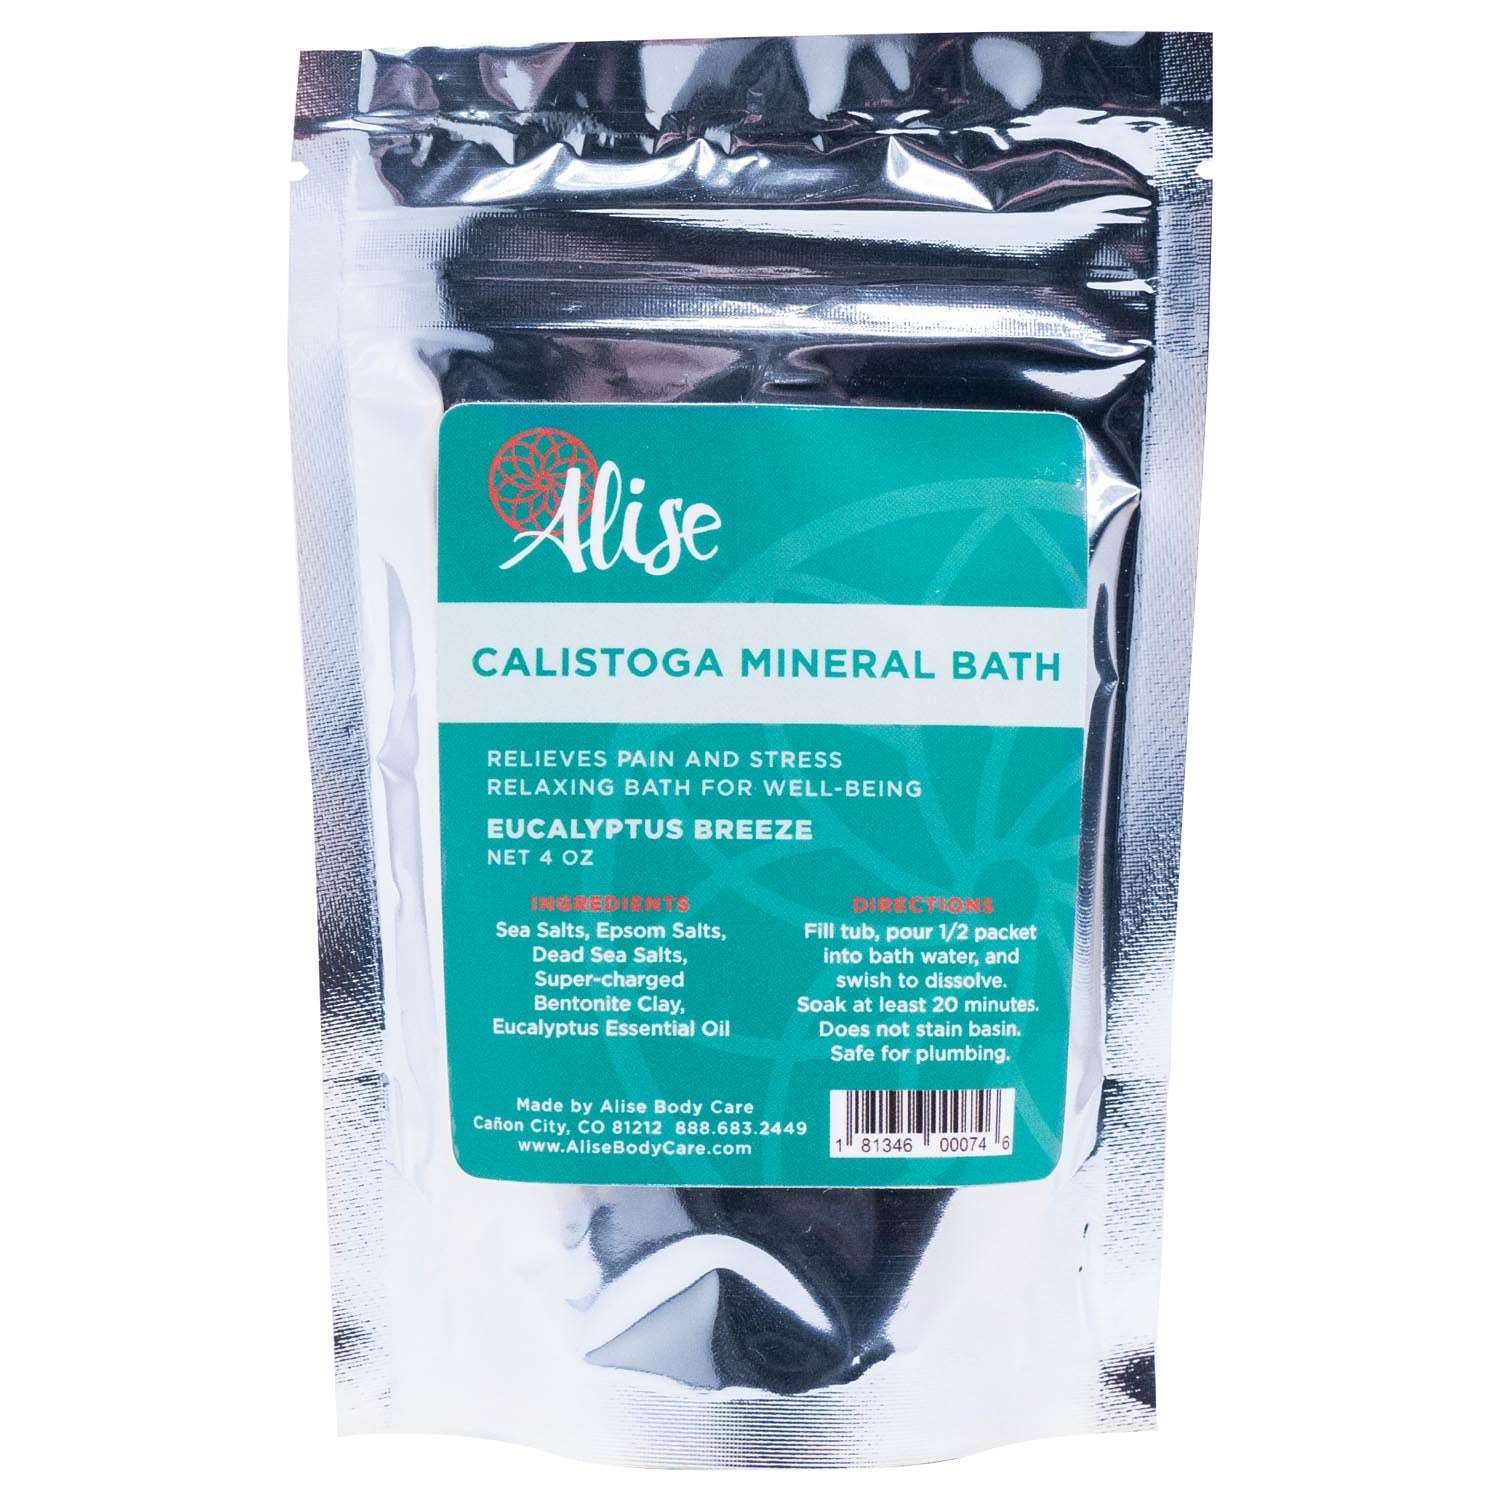 Calistoga Mineral Bath Eucalyptus Breeze 4oz rejuvenate by Alise Body Care